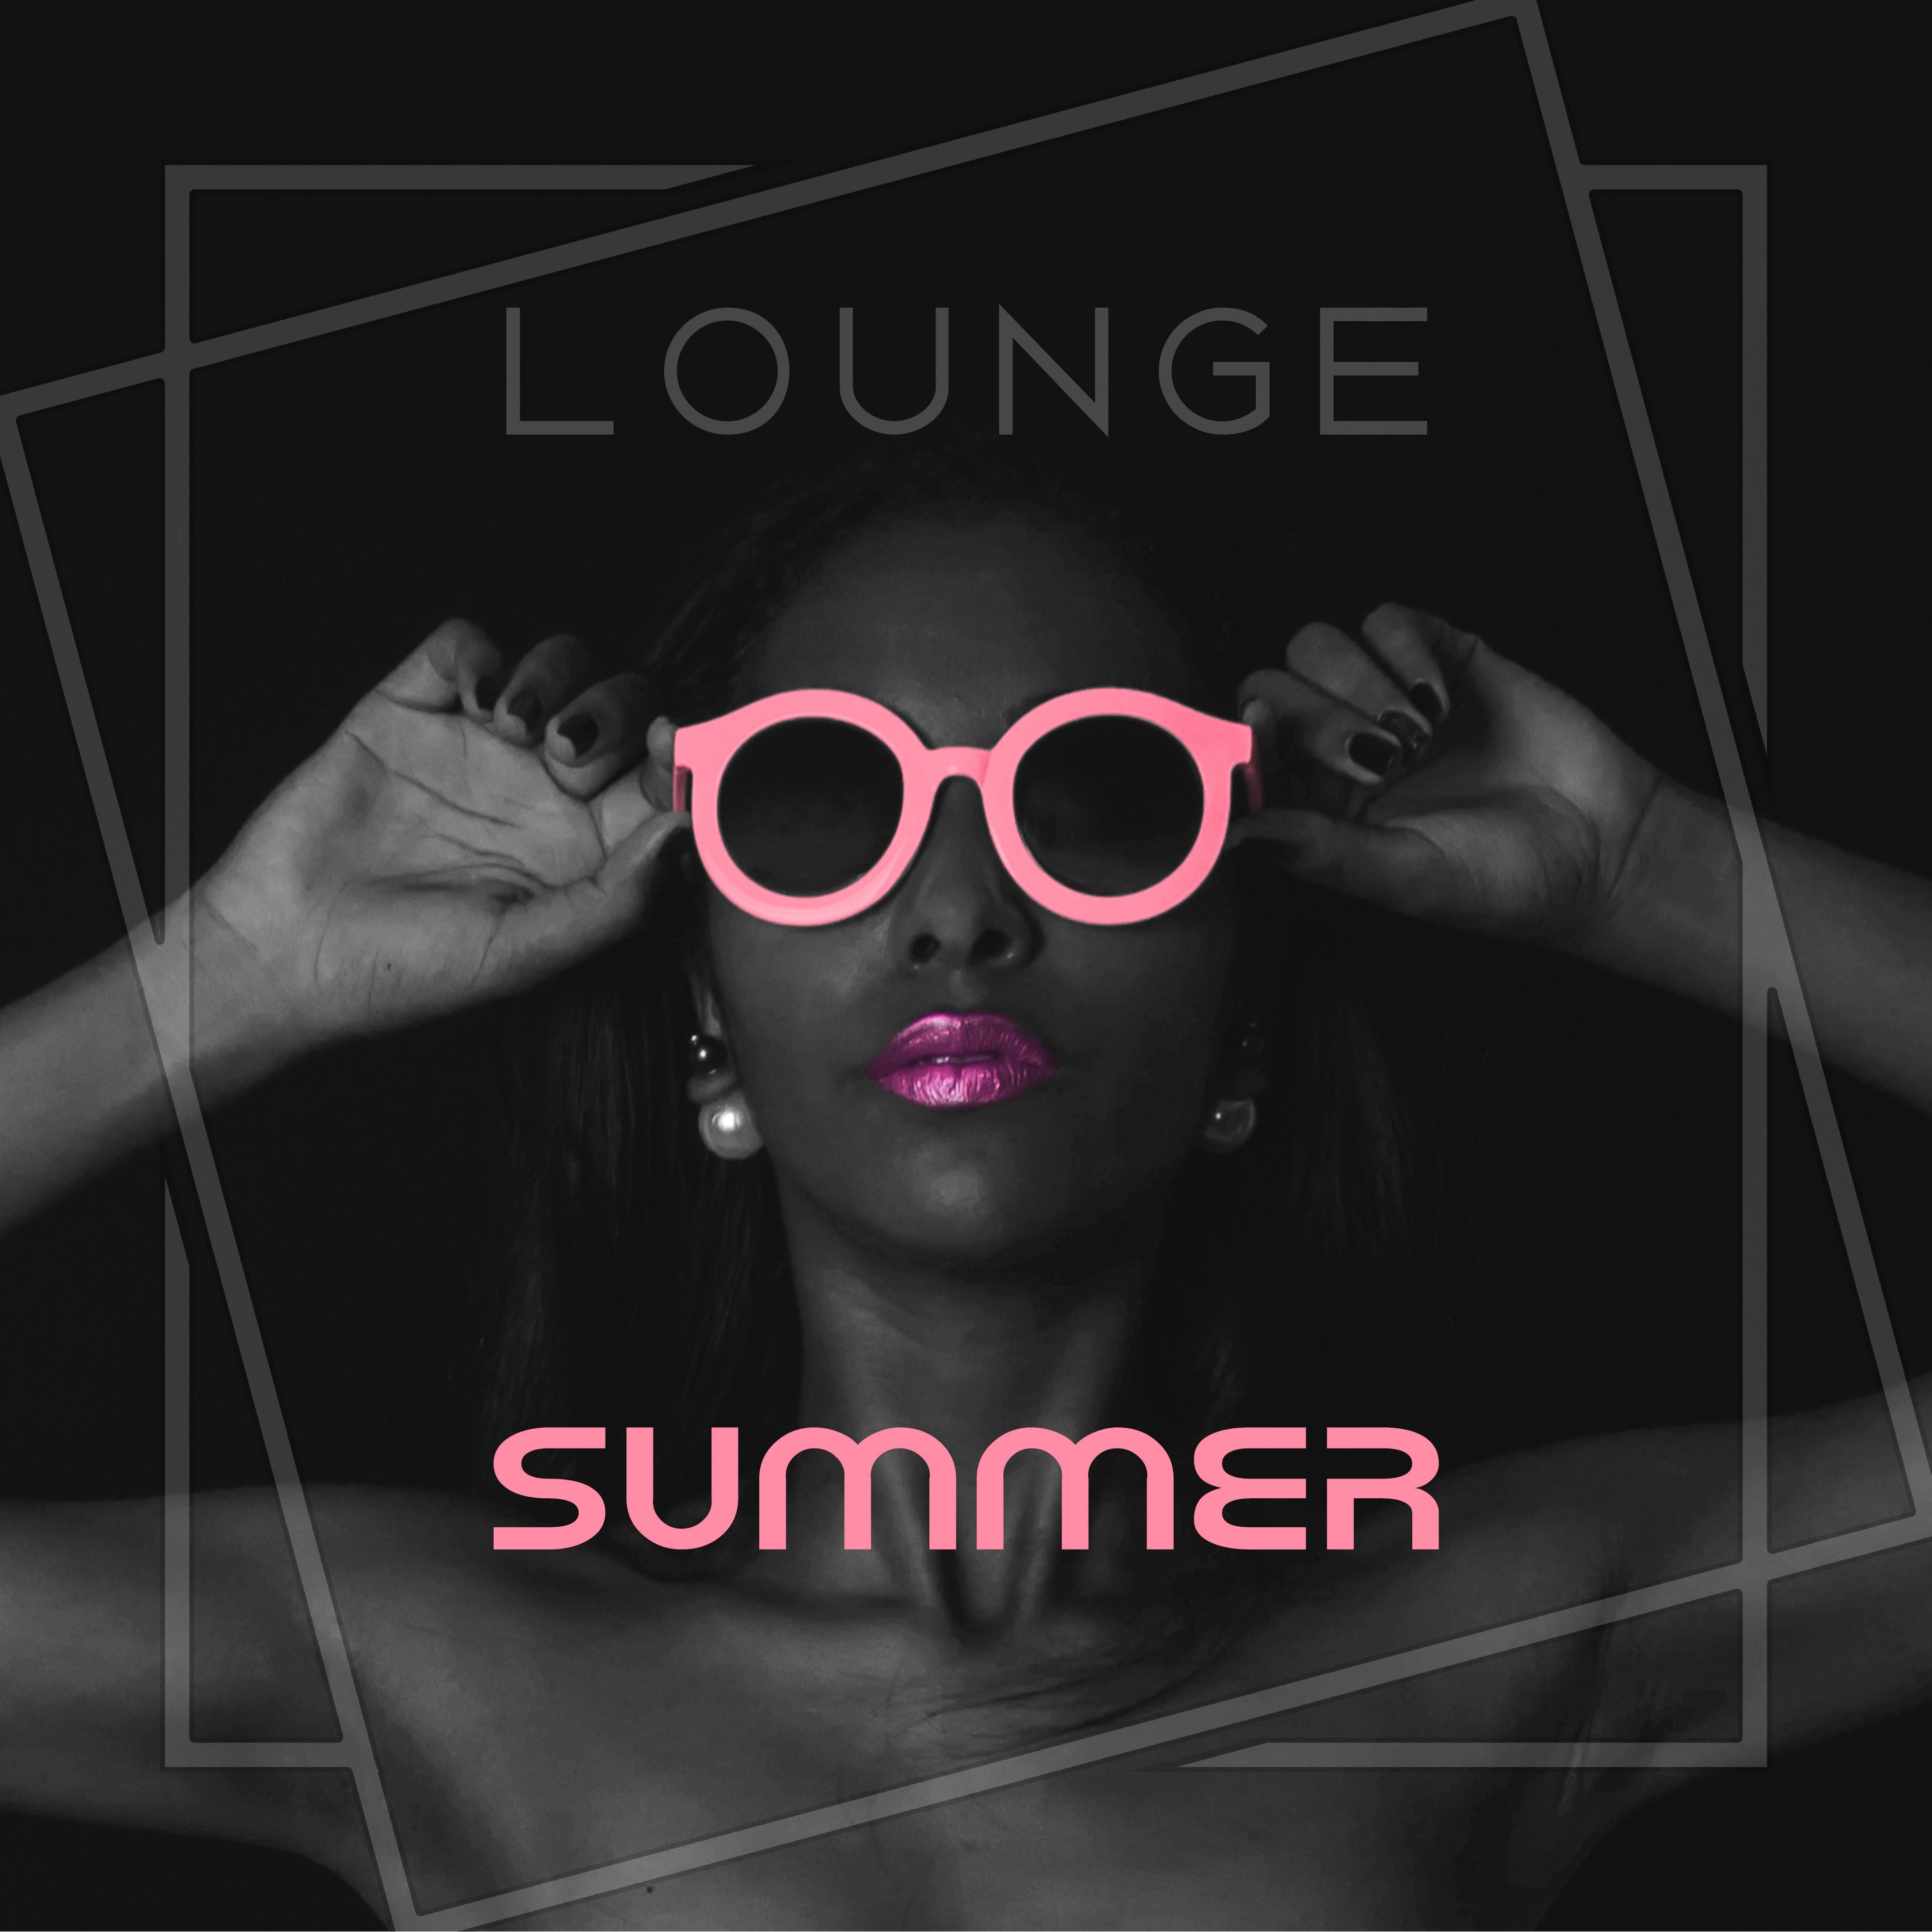 Lounge Summer  Best Chill Out Music, Beach Chill, Summertime, Pure Rest, Zen Music, Soft Sounds, Relaxation